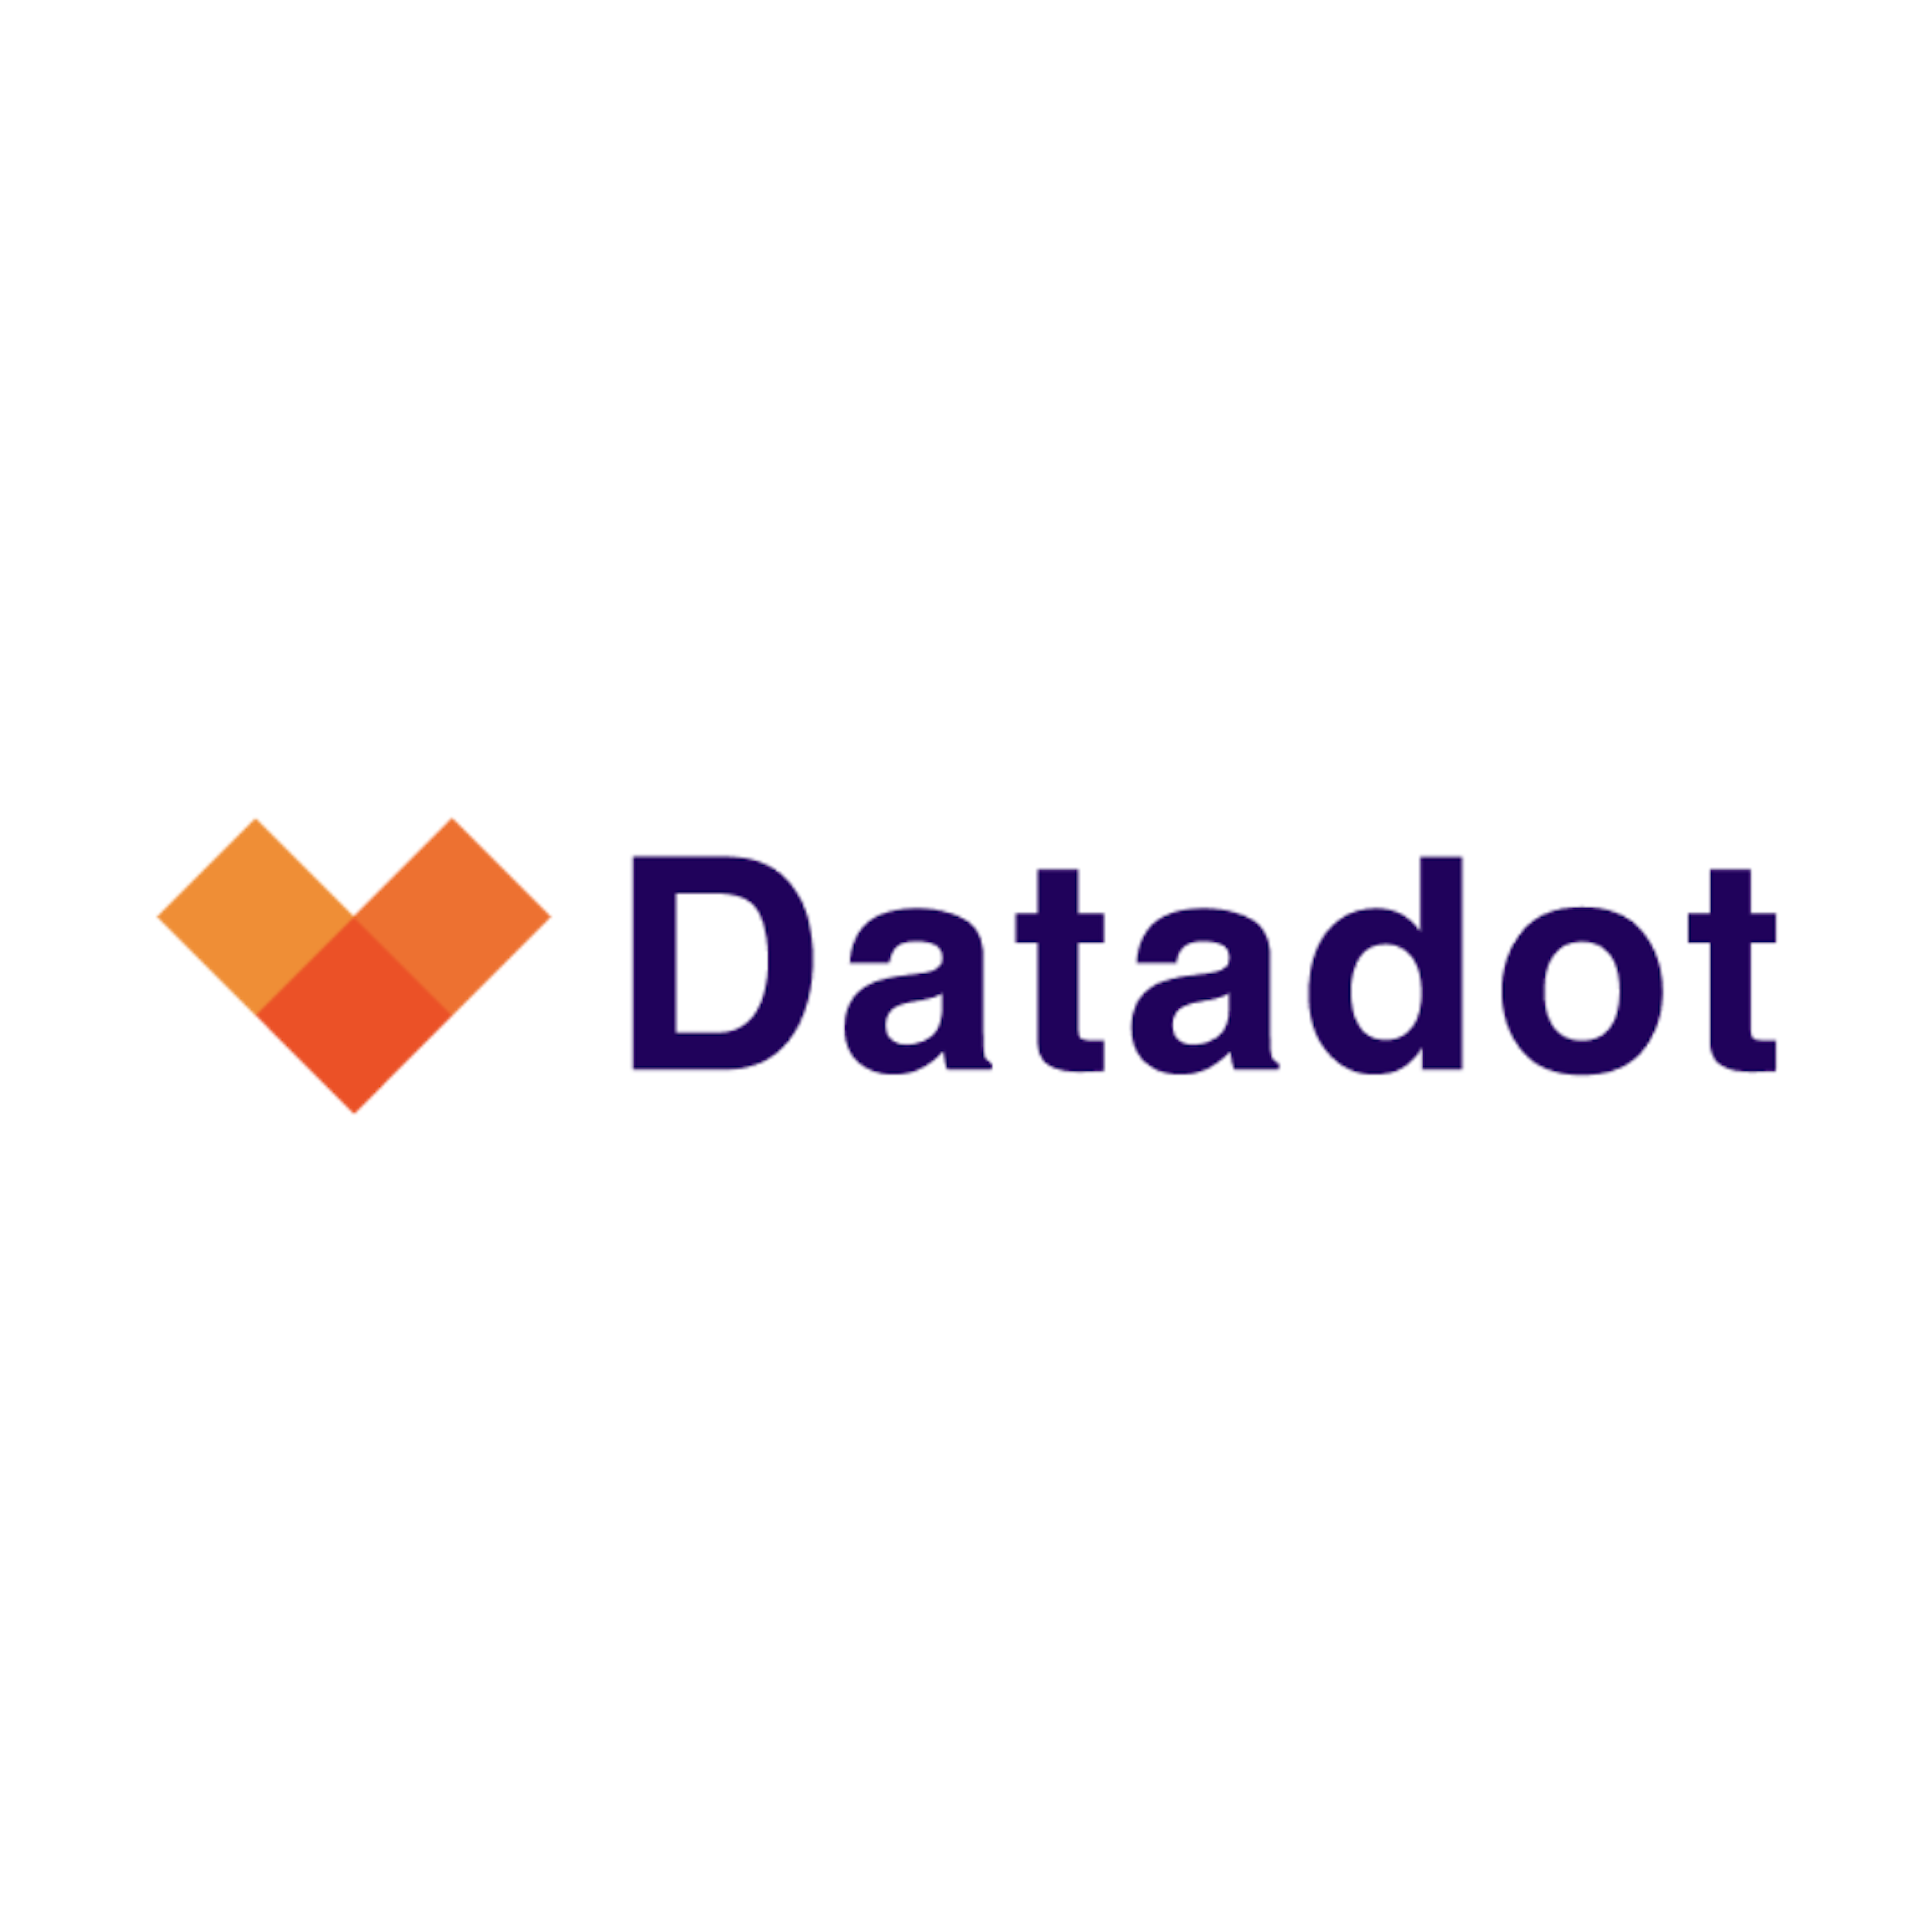 Datadot Logo